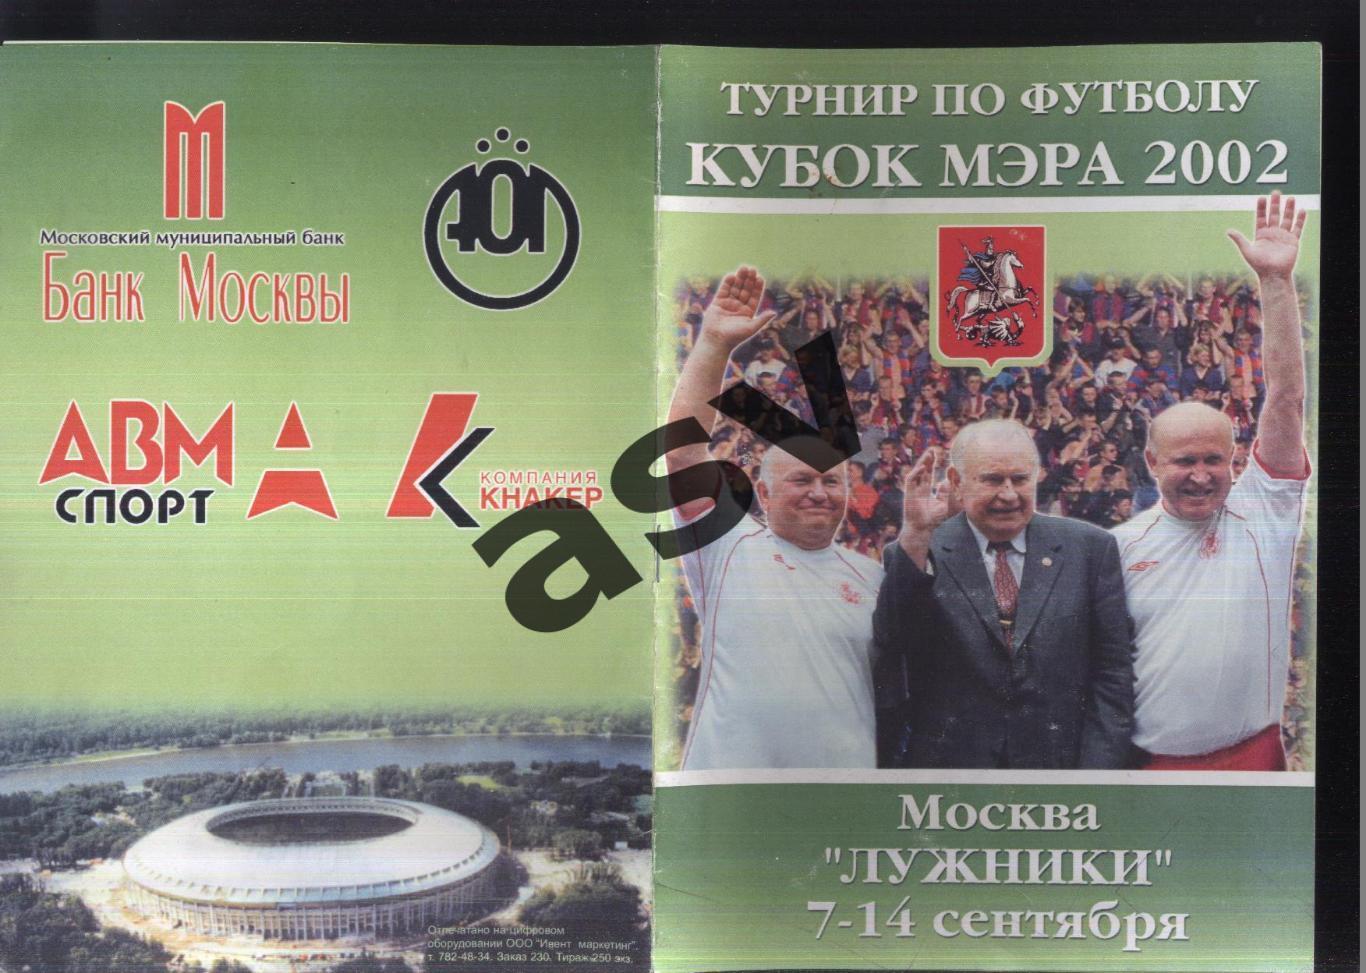 Кубок Мэра Москвы — 07-14.09.2002